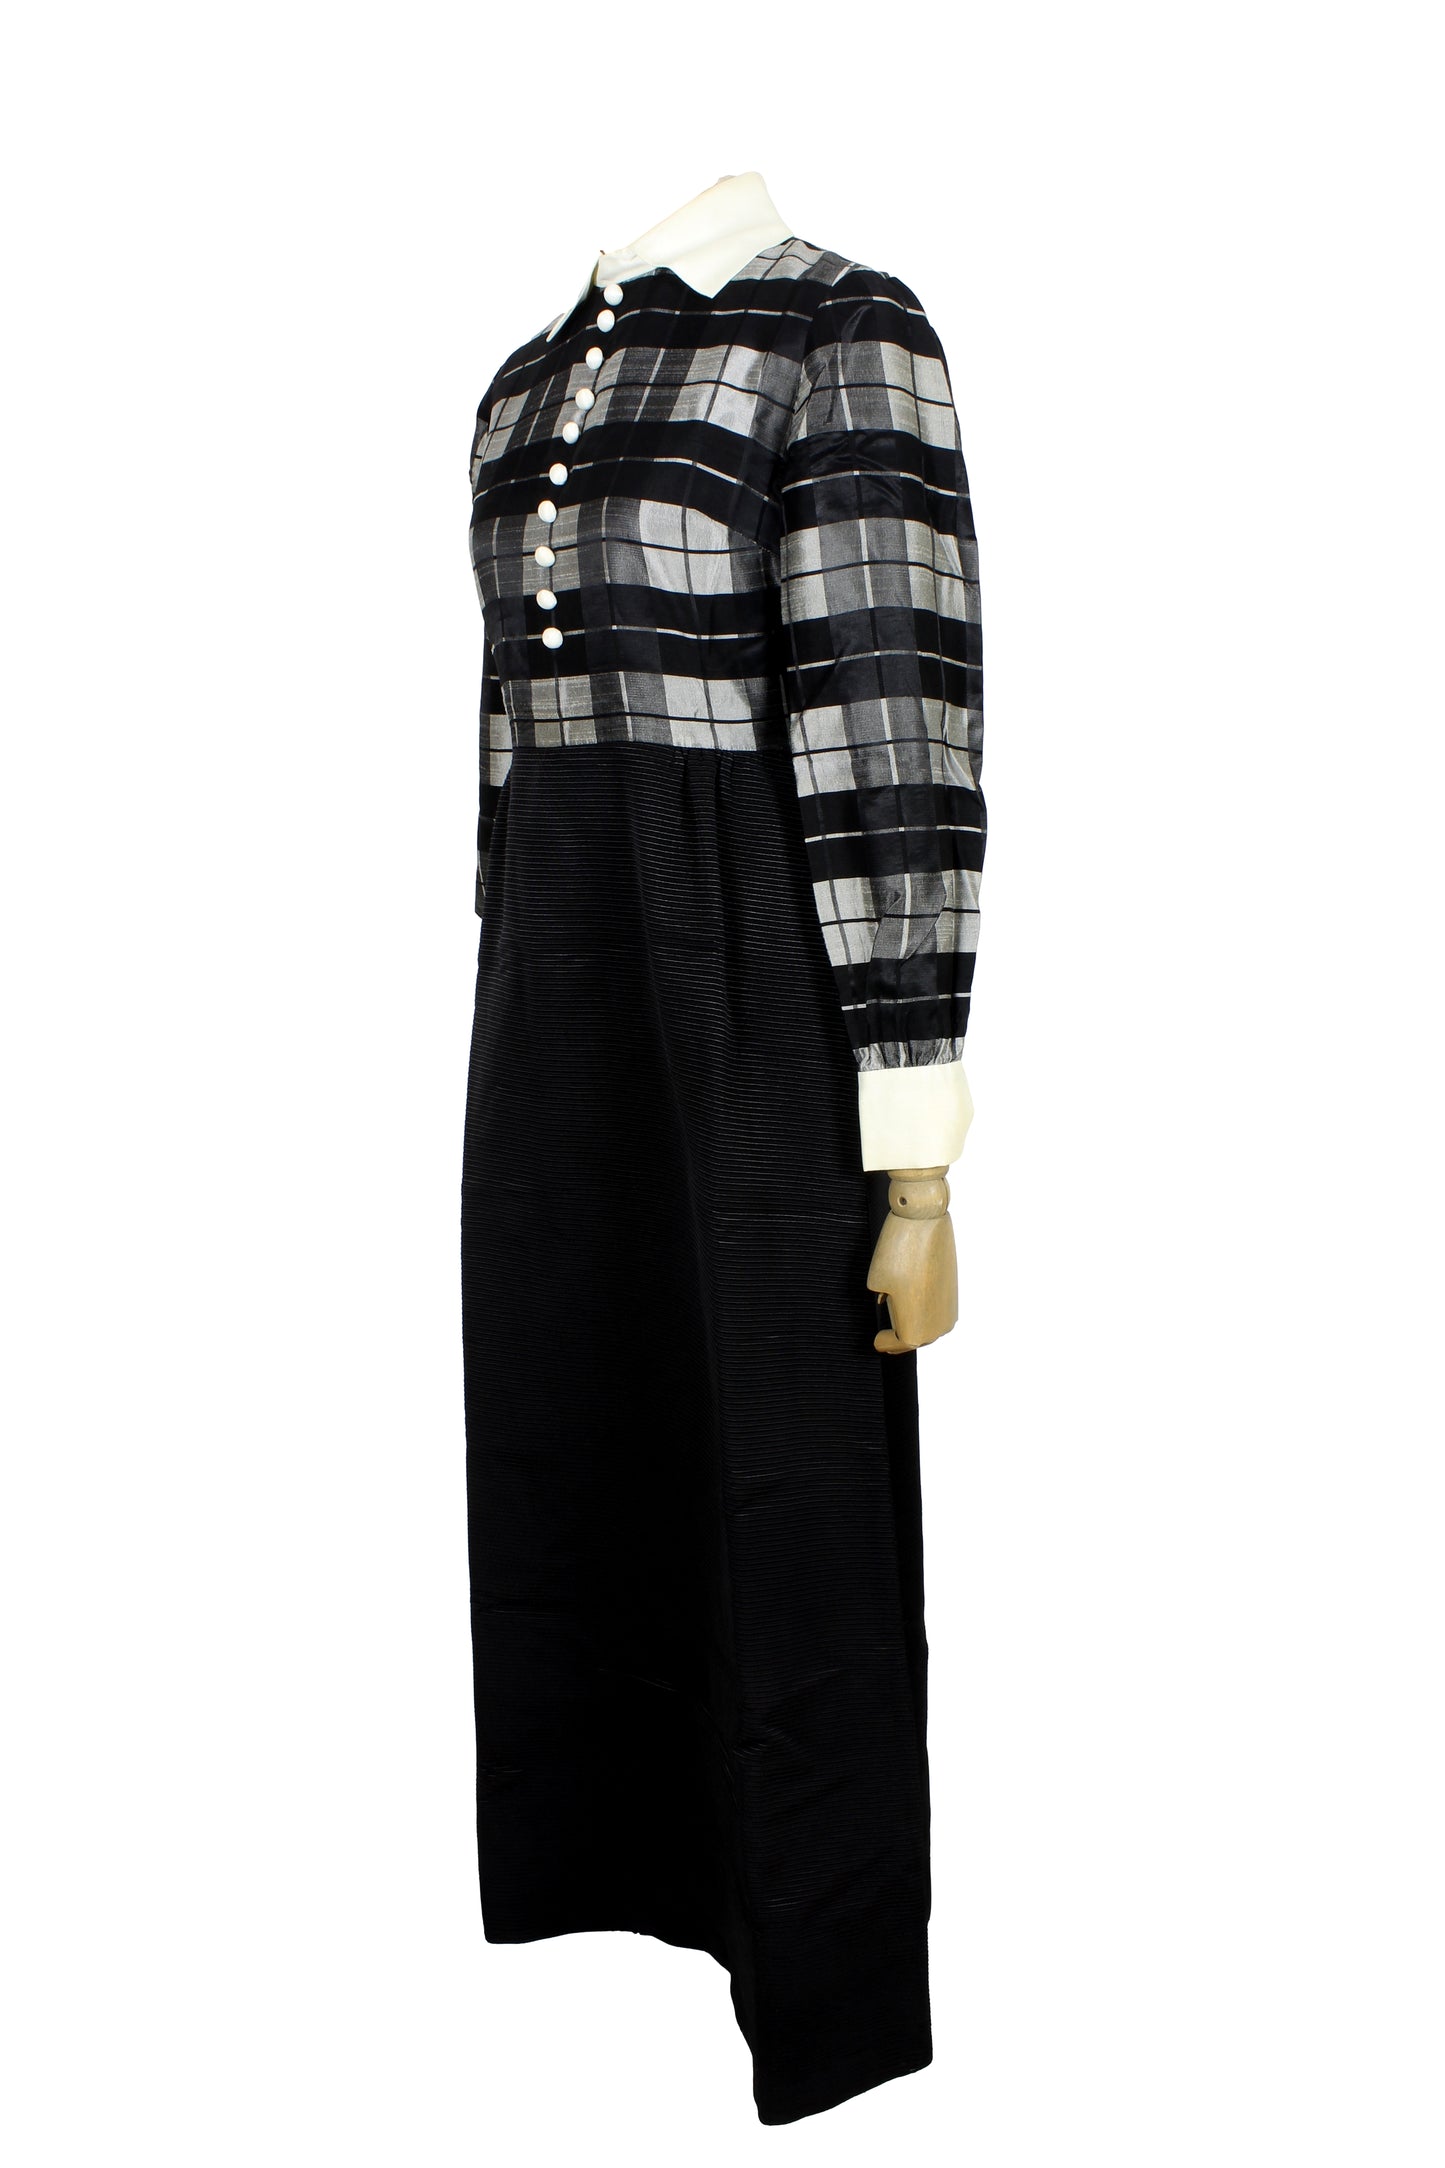 Jean Varon Black Long Dress Vintage 1970s